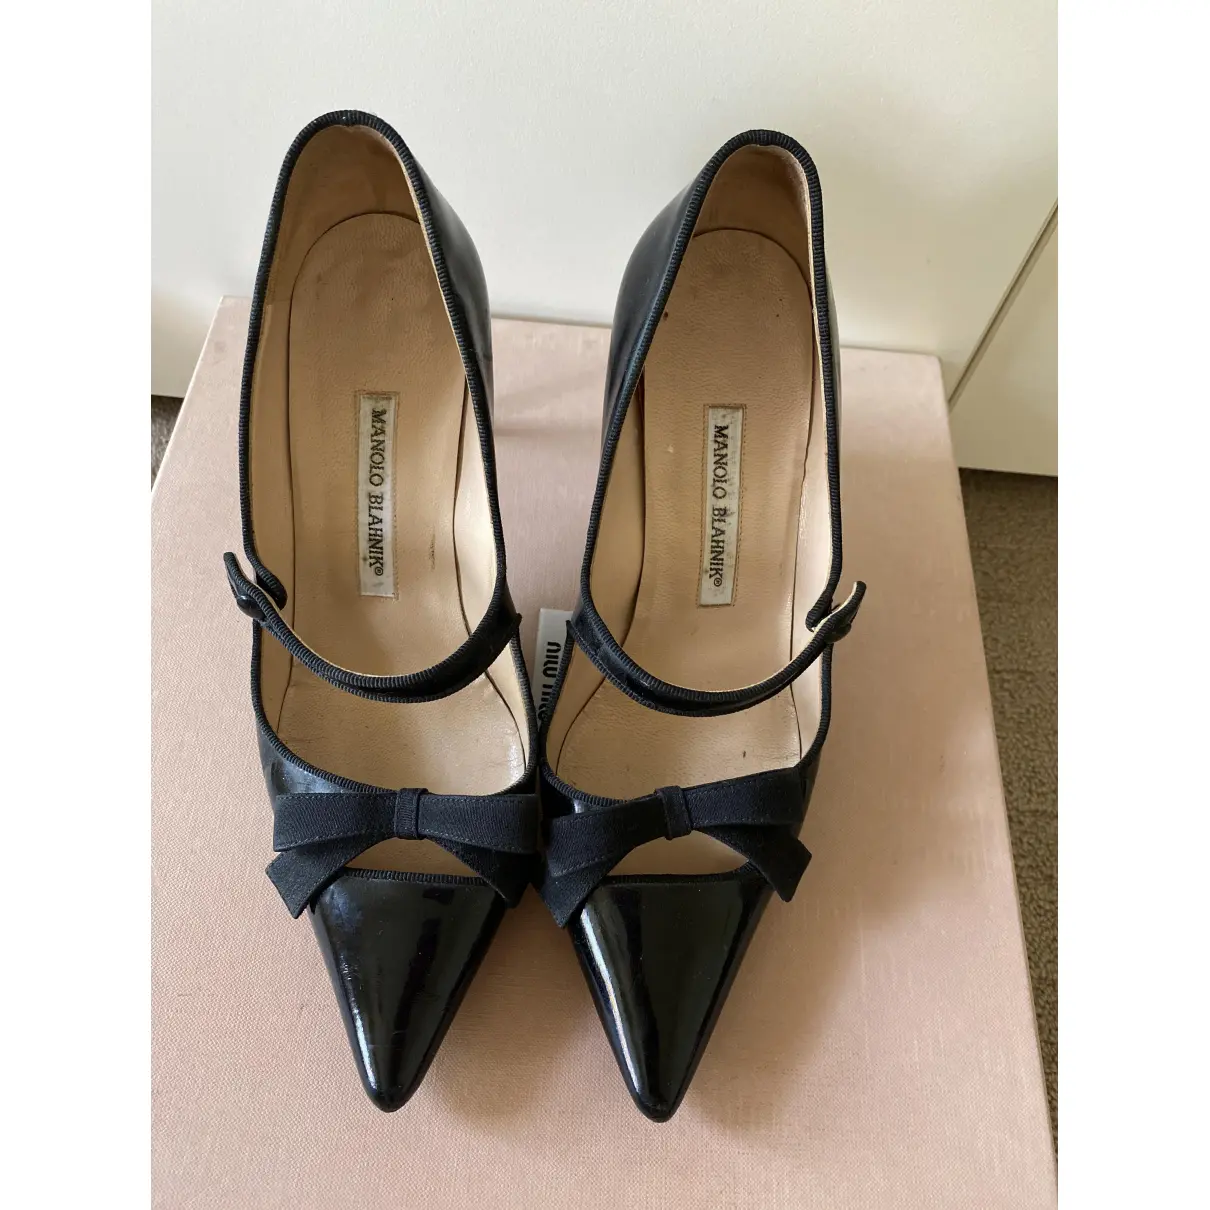 Buy Manolo Blahnik Hangisi patent leather heels online - Vintage